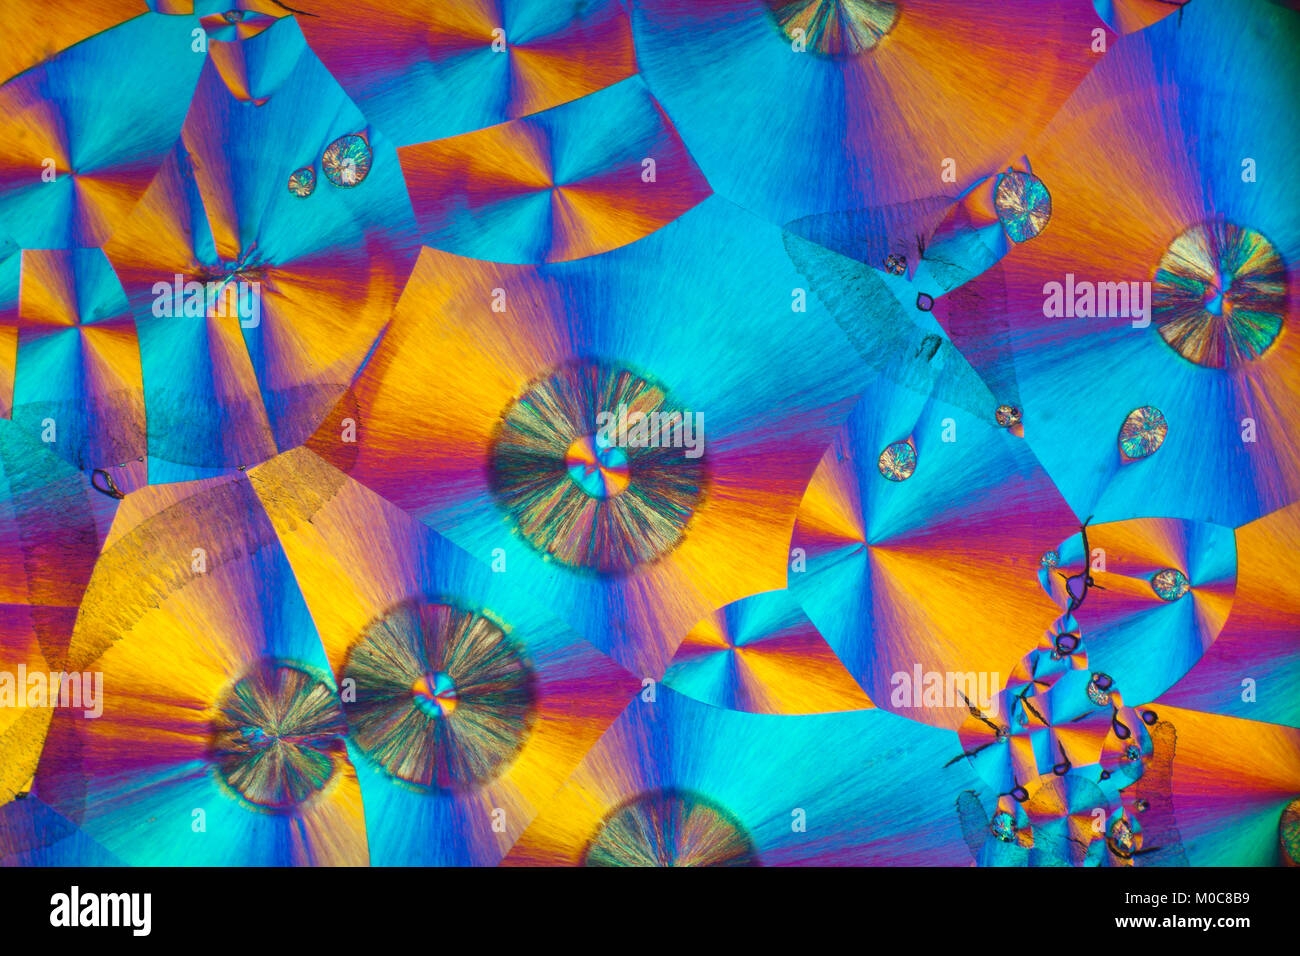 Ácido benzoico, Cruz microfotografía polarizada, fusión química crystalised diapositivas. Foto de stock